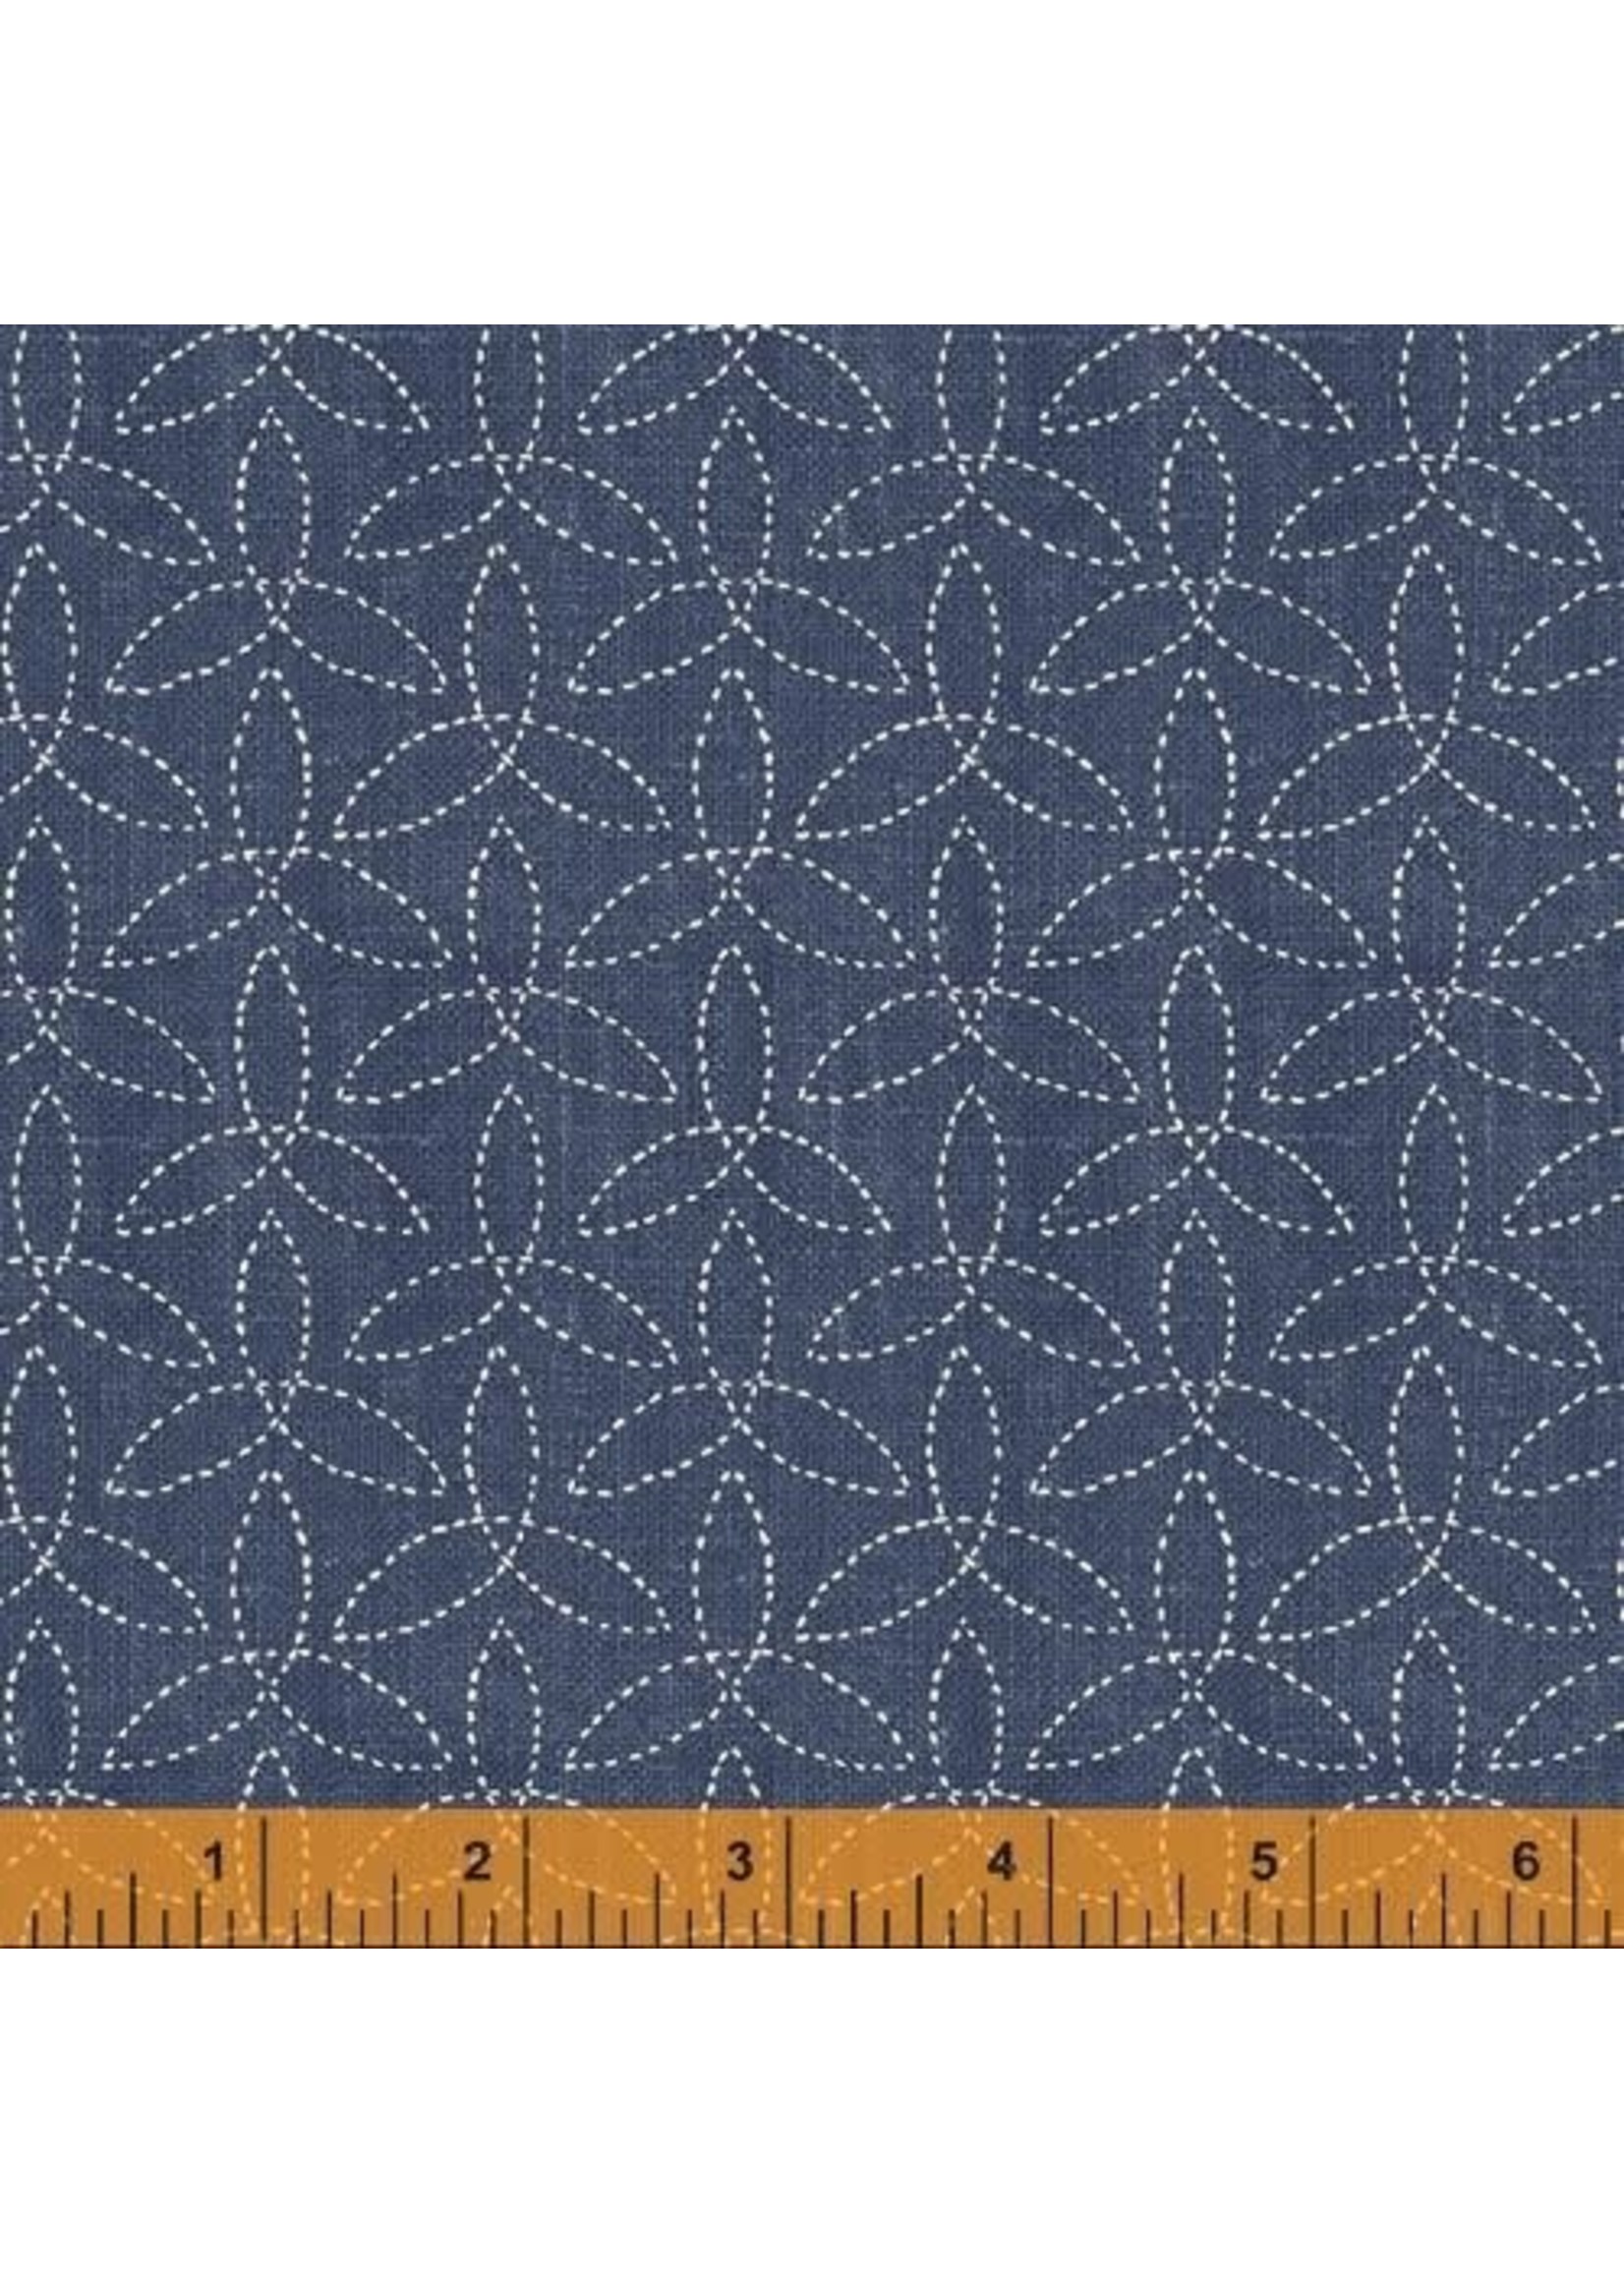 Windham Fabrics Sashiko - Petals - Blue White - 51813-3